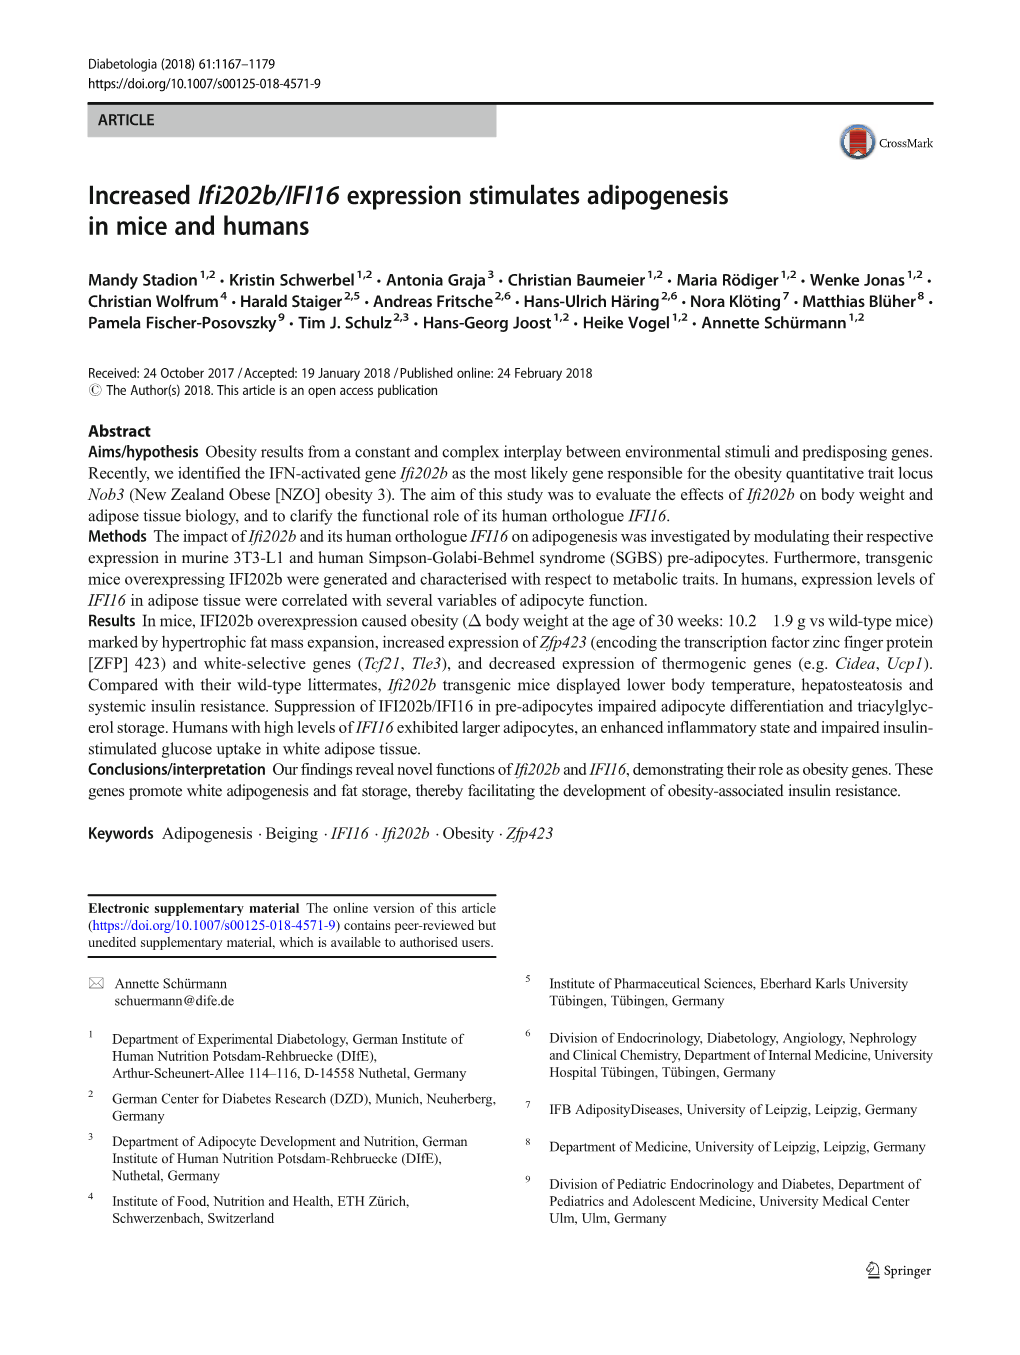 Increased Ifi202b/IFI16 Expression Stimulates Adipogenesis in Mice and Humans